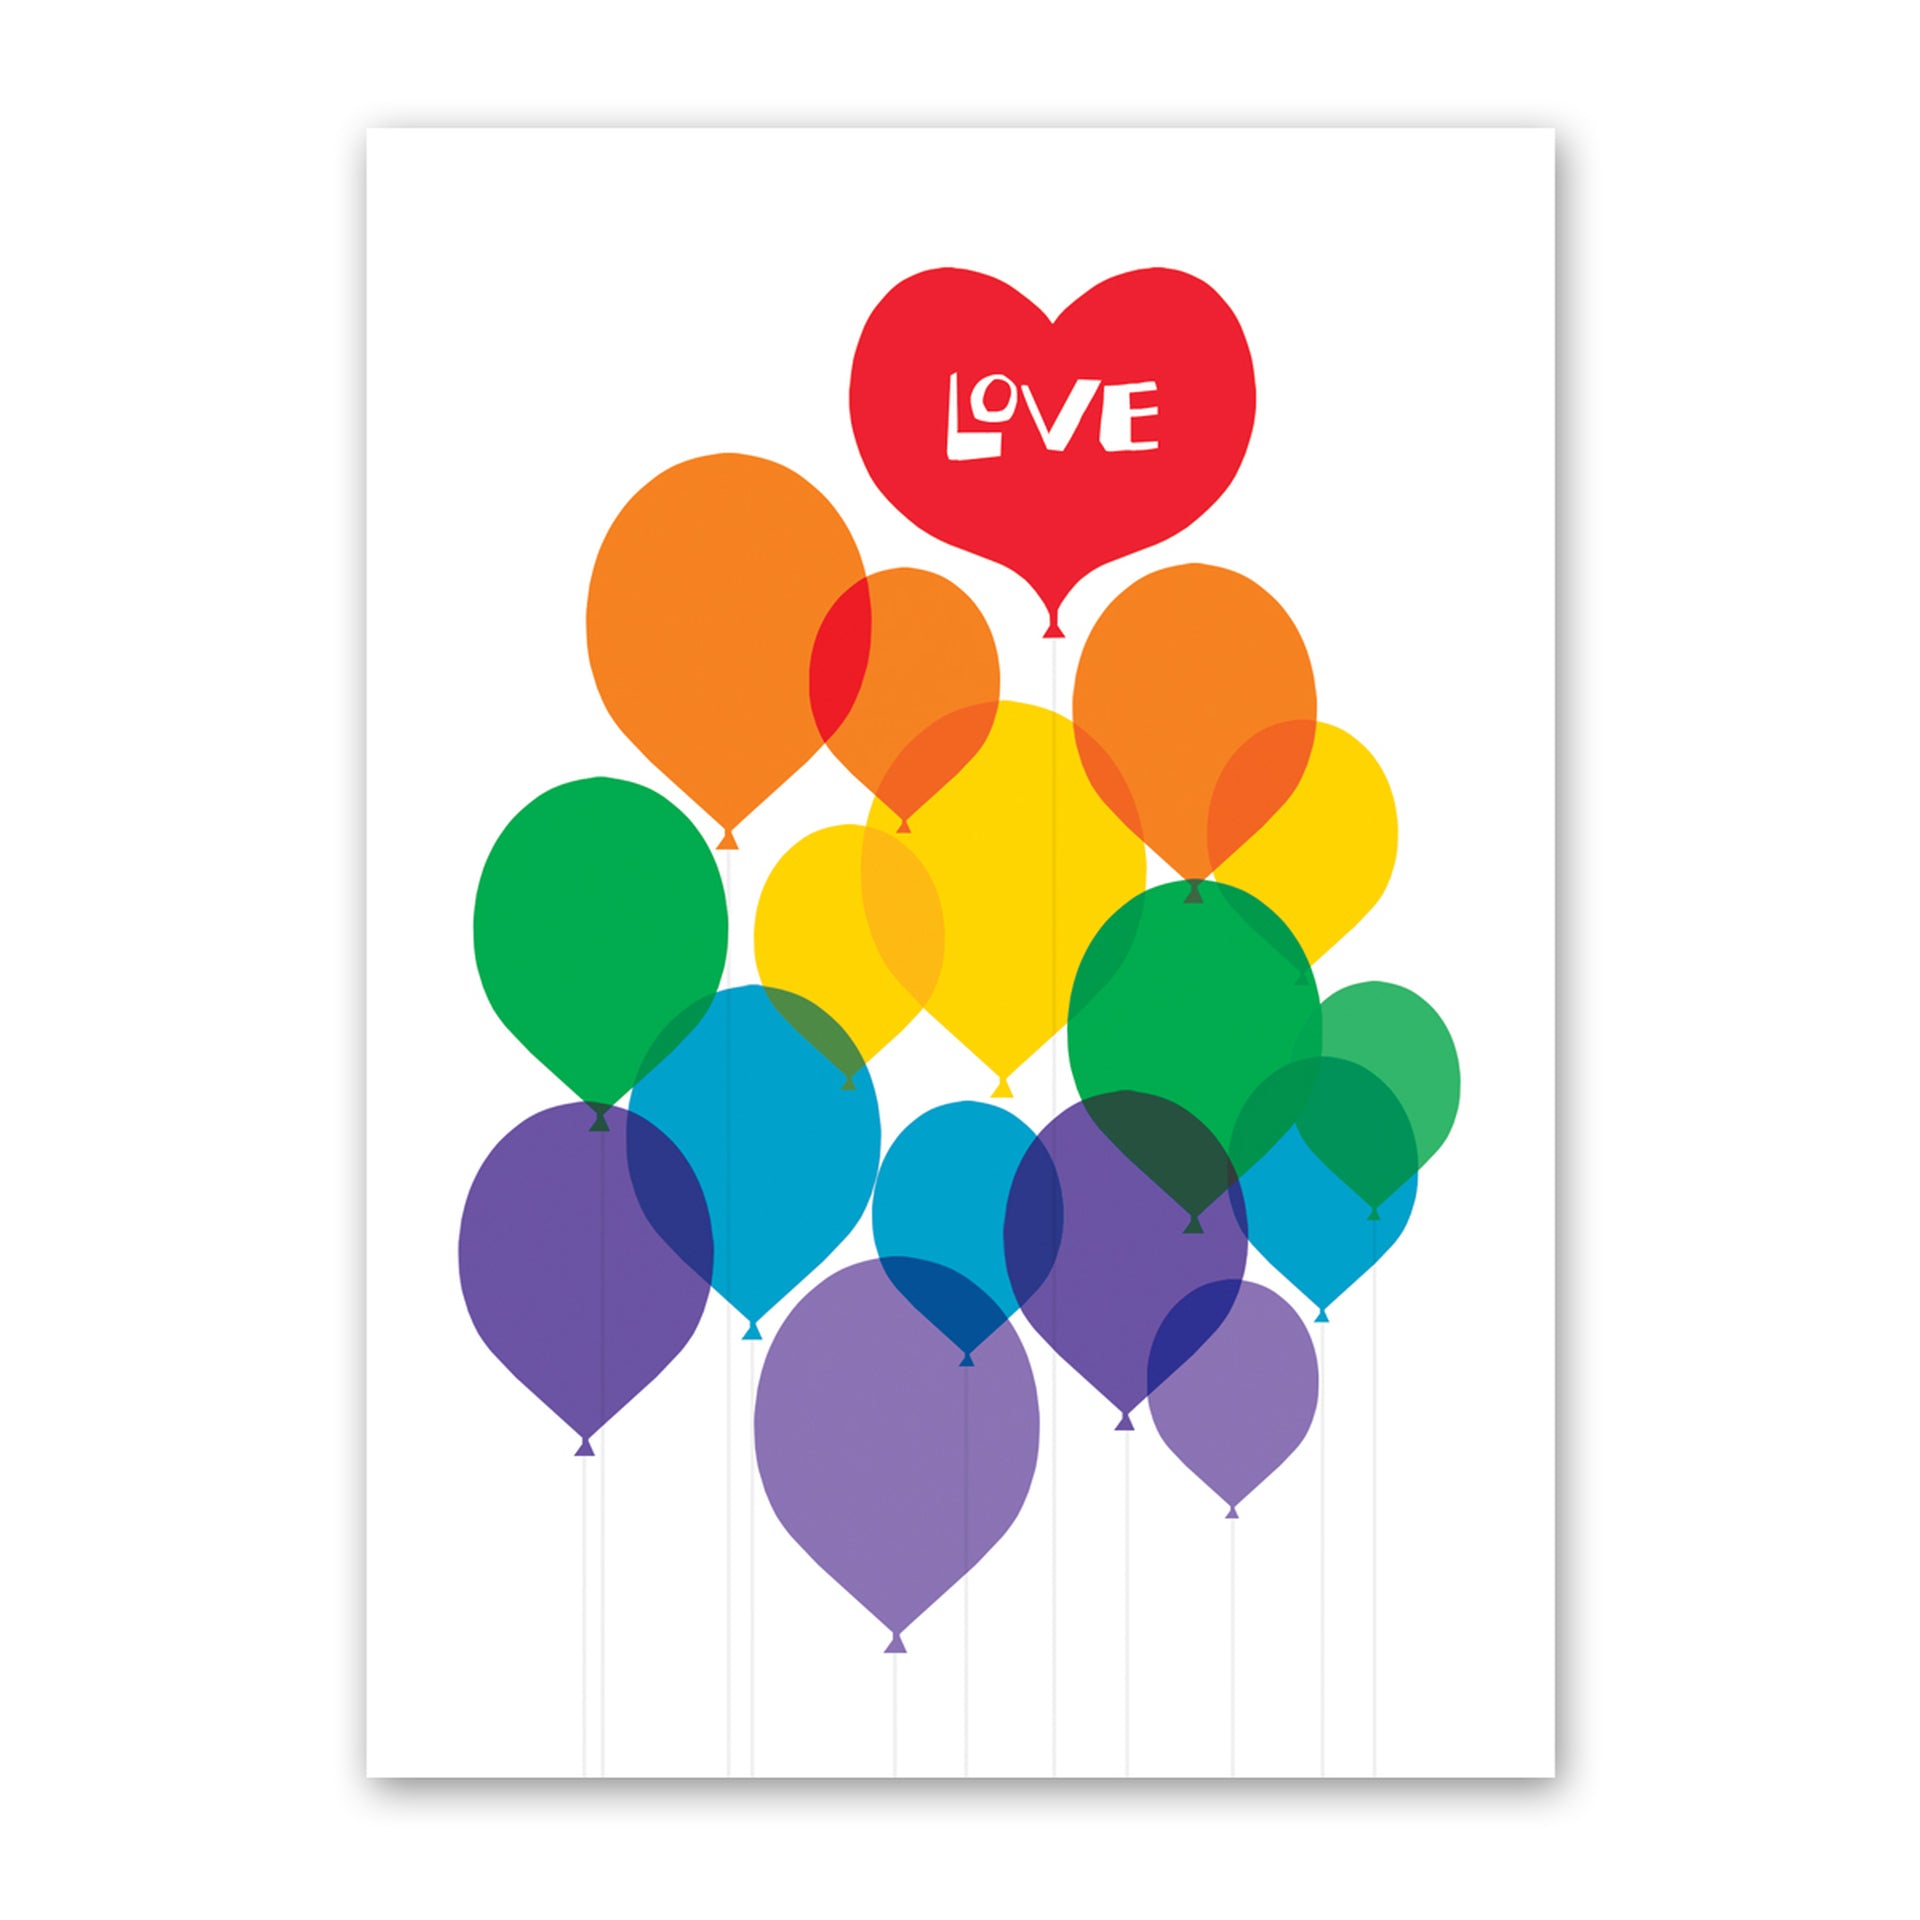 Love rainbow balloons greeting card